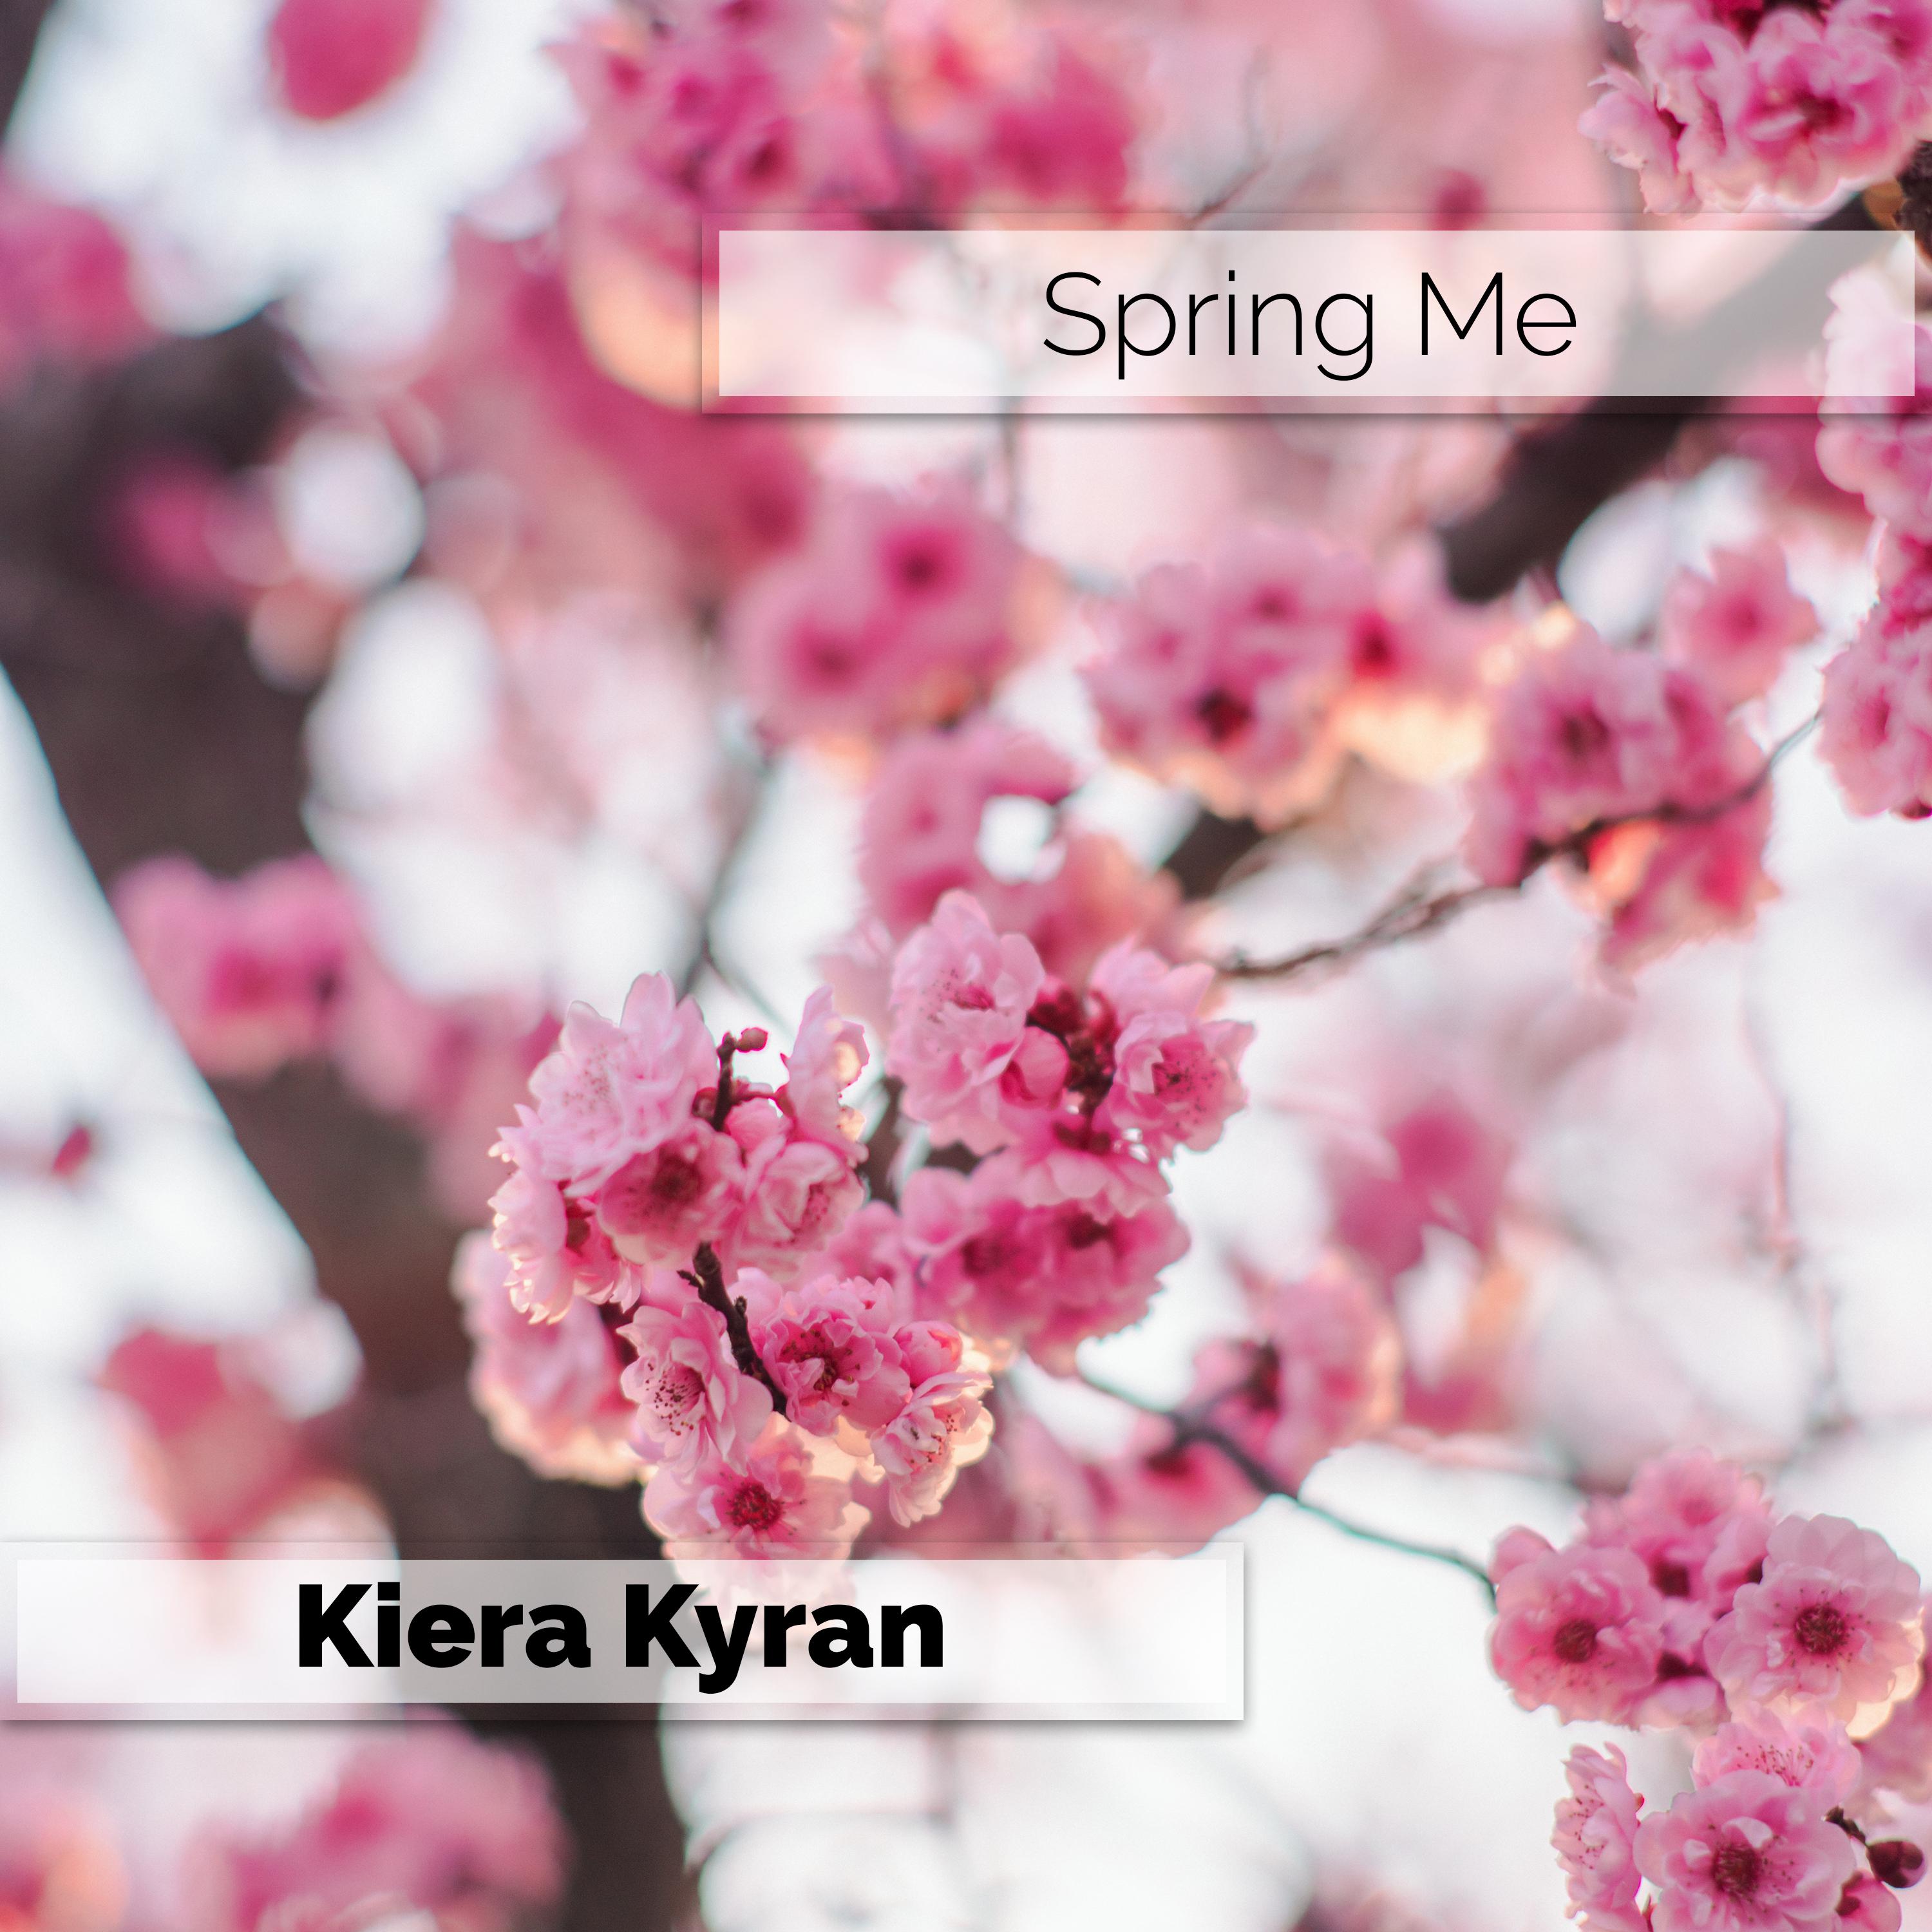 Kiera Kyran - Like That (Slow +2)